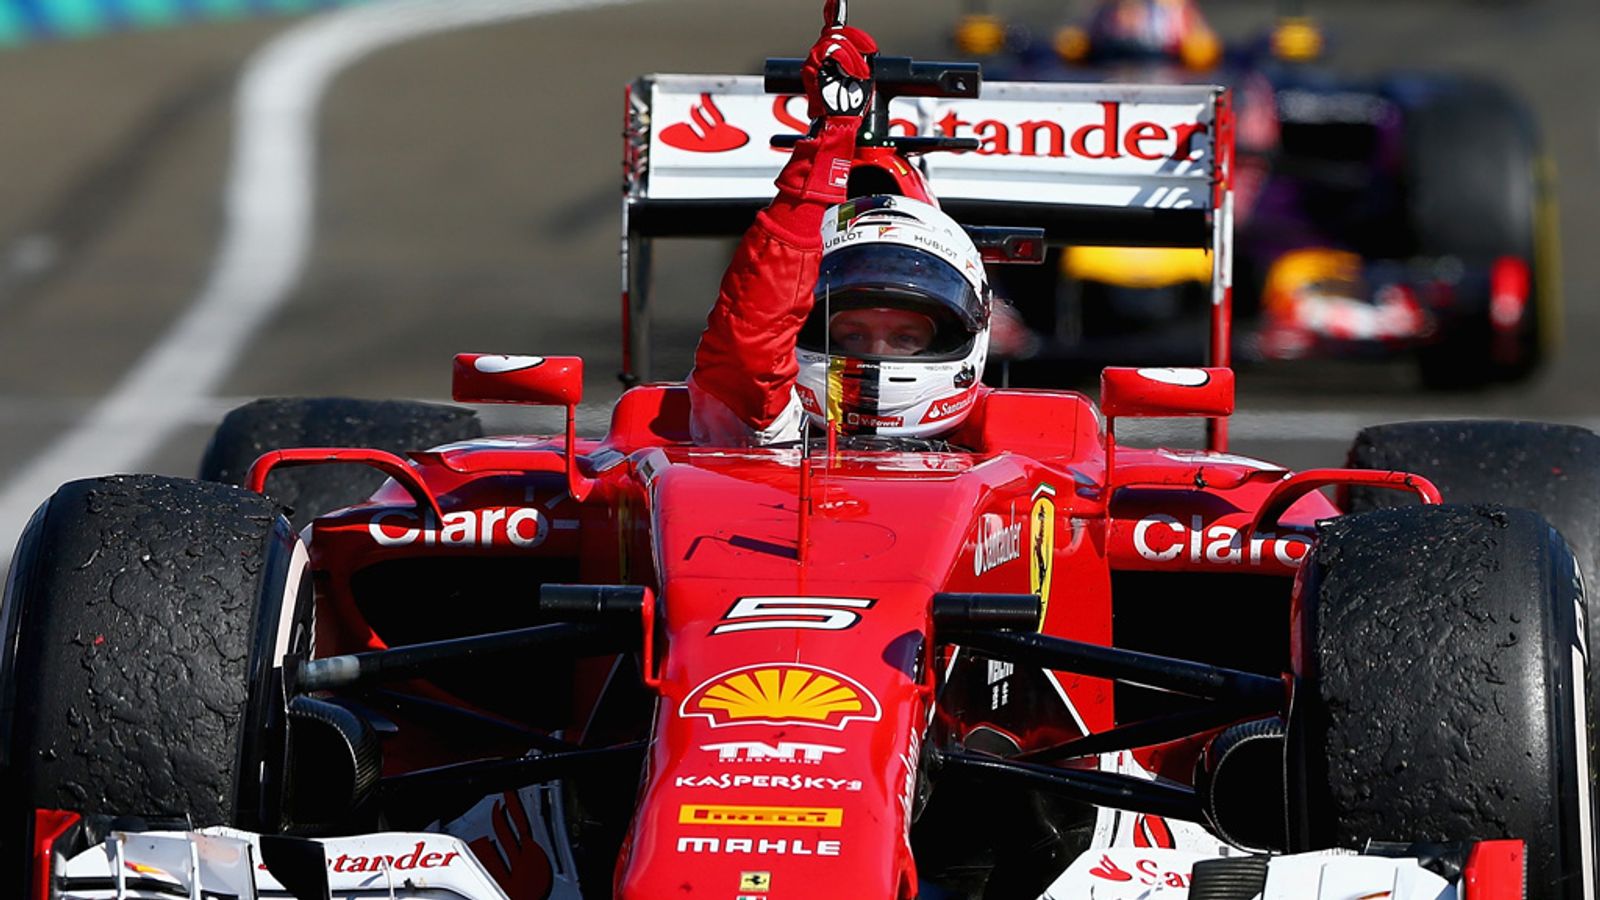 F1 News Today F1 2019 news silly season, Ferrari, Sebastian Vettel